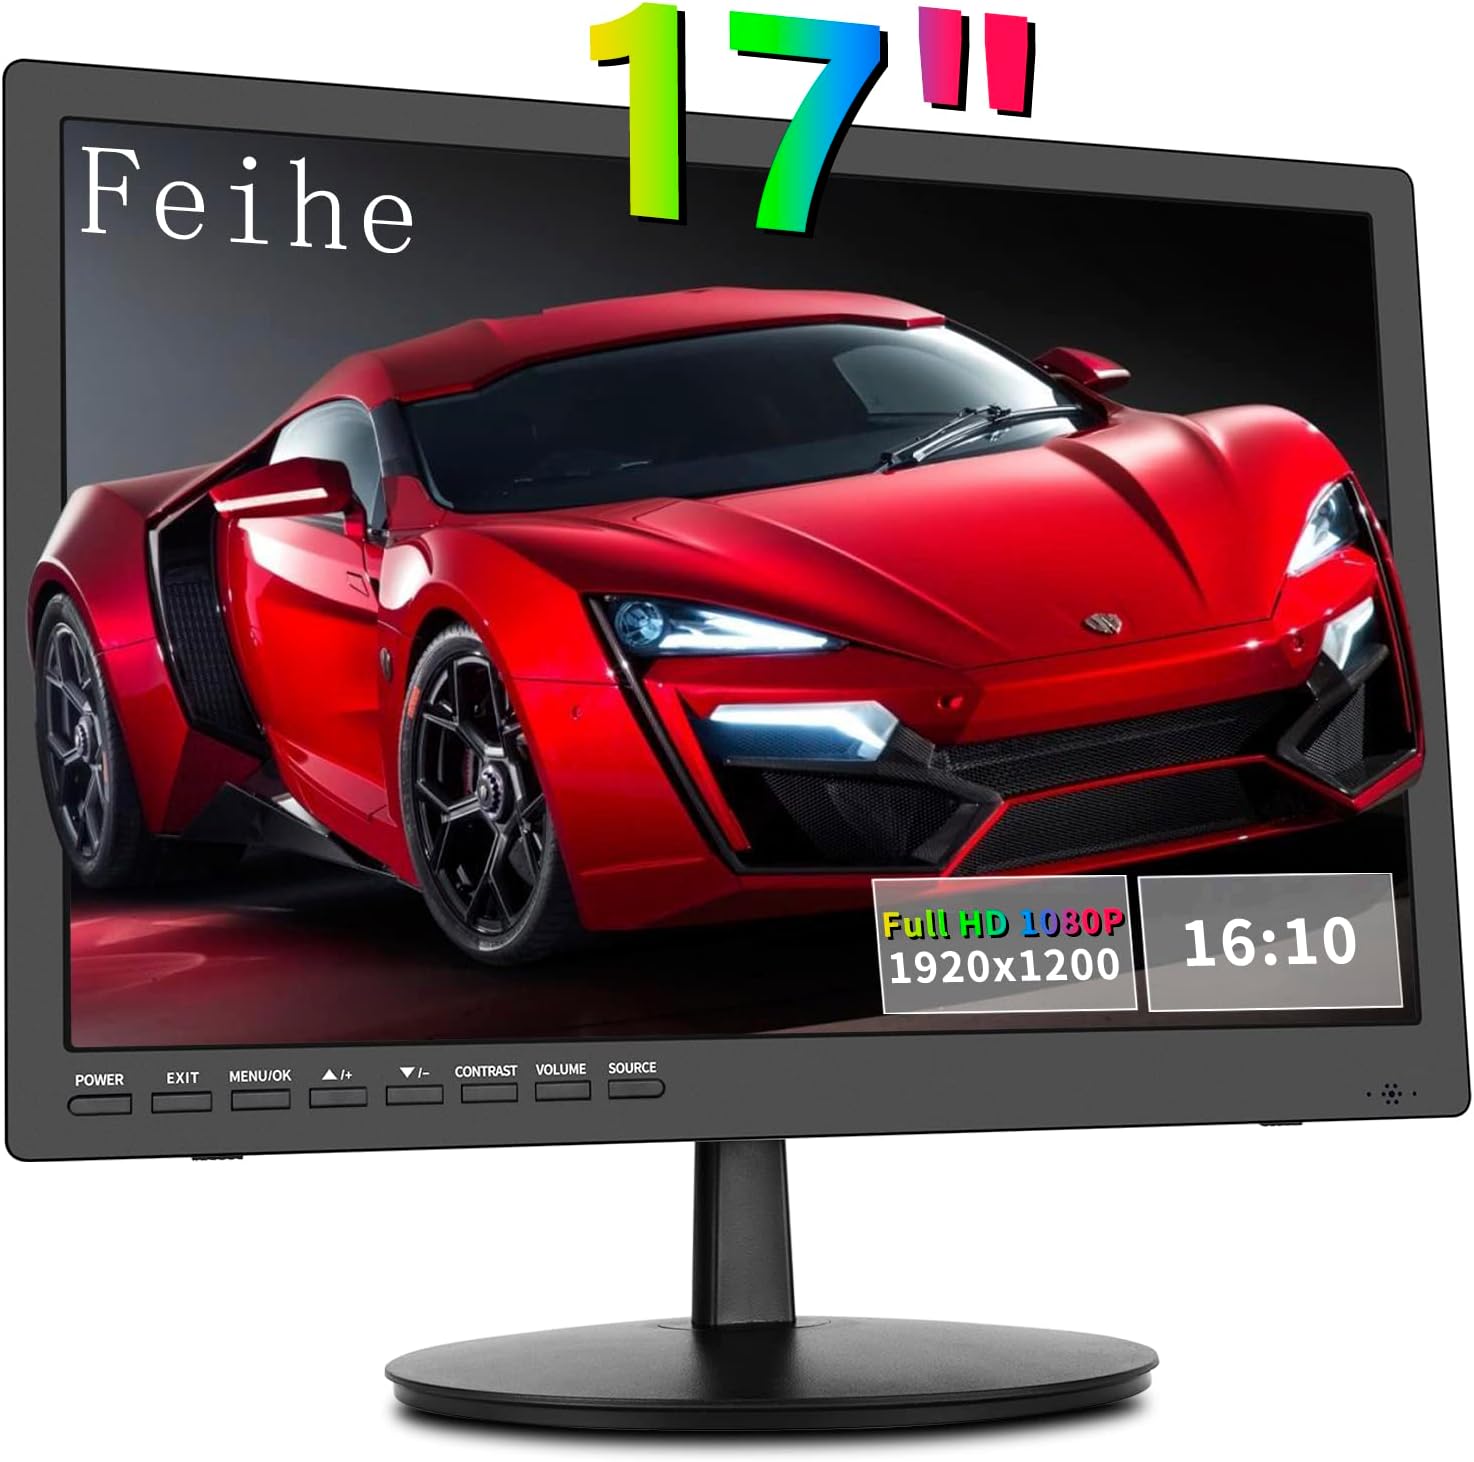 Feihe 17 Inch Computer Monitor, FHD 1920x1200 LED Monitor - $70